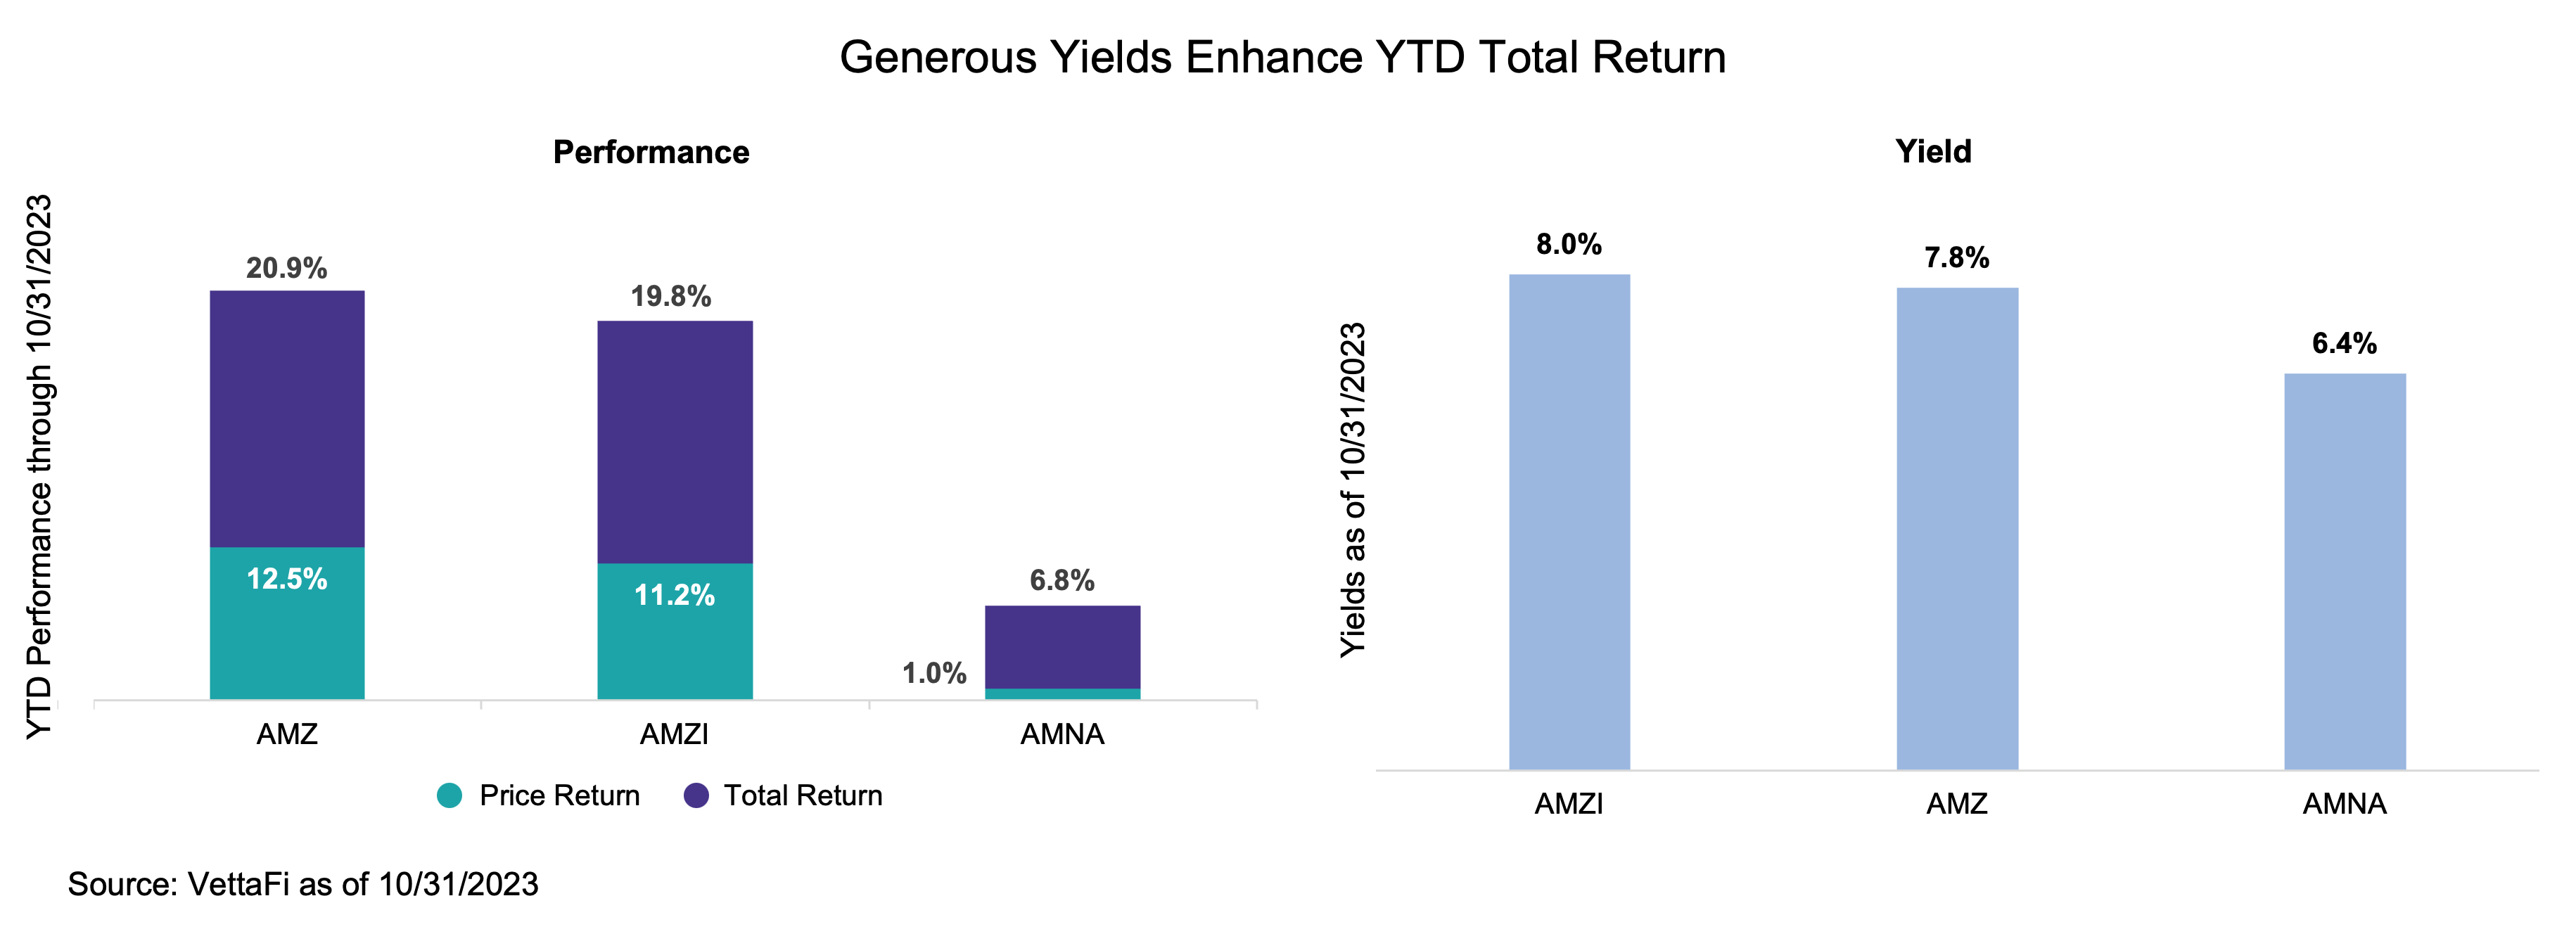 Generous Yields Enhance YTD Total Returns